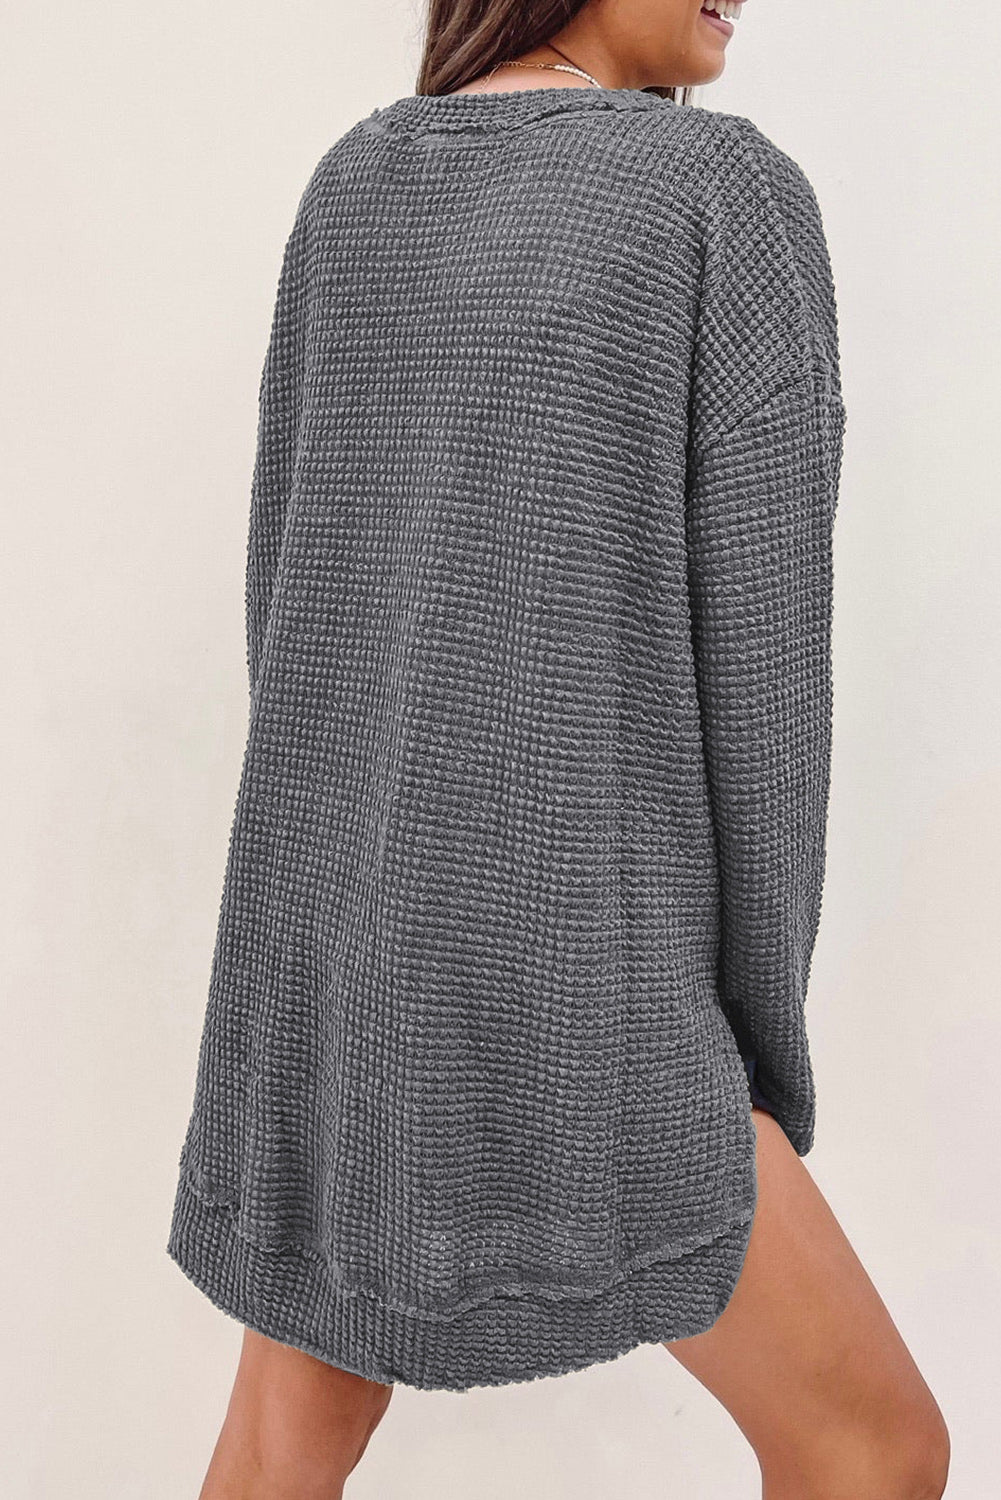 Waffle-Knit Round Neck Long Sleeve Sweatshirt Print on any thing USA/STOD clothes